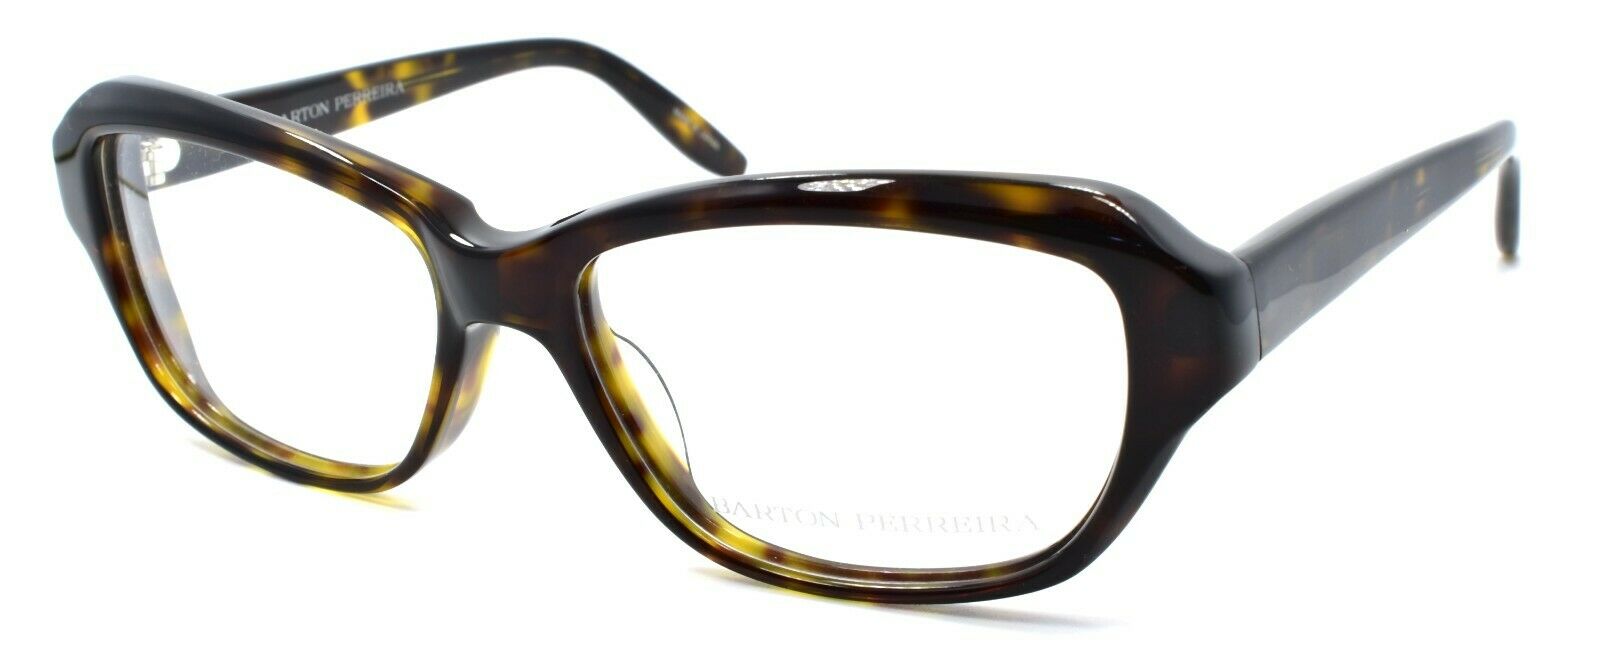 1-Barton Perreira Corday Women's Eyeglasses 52-16-140 Dark Walnut JAPAN-672263037842-IKSpecs